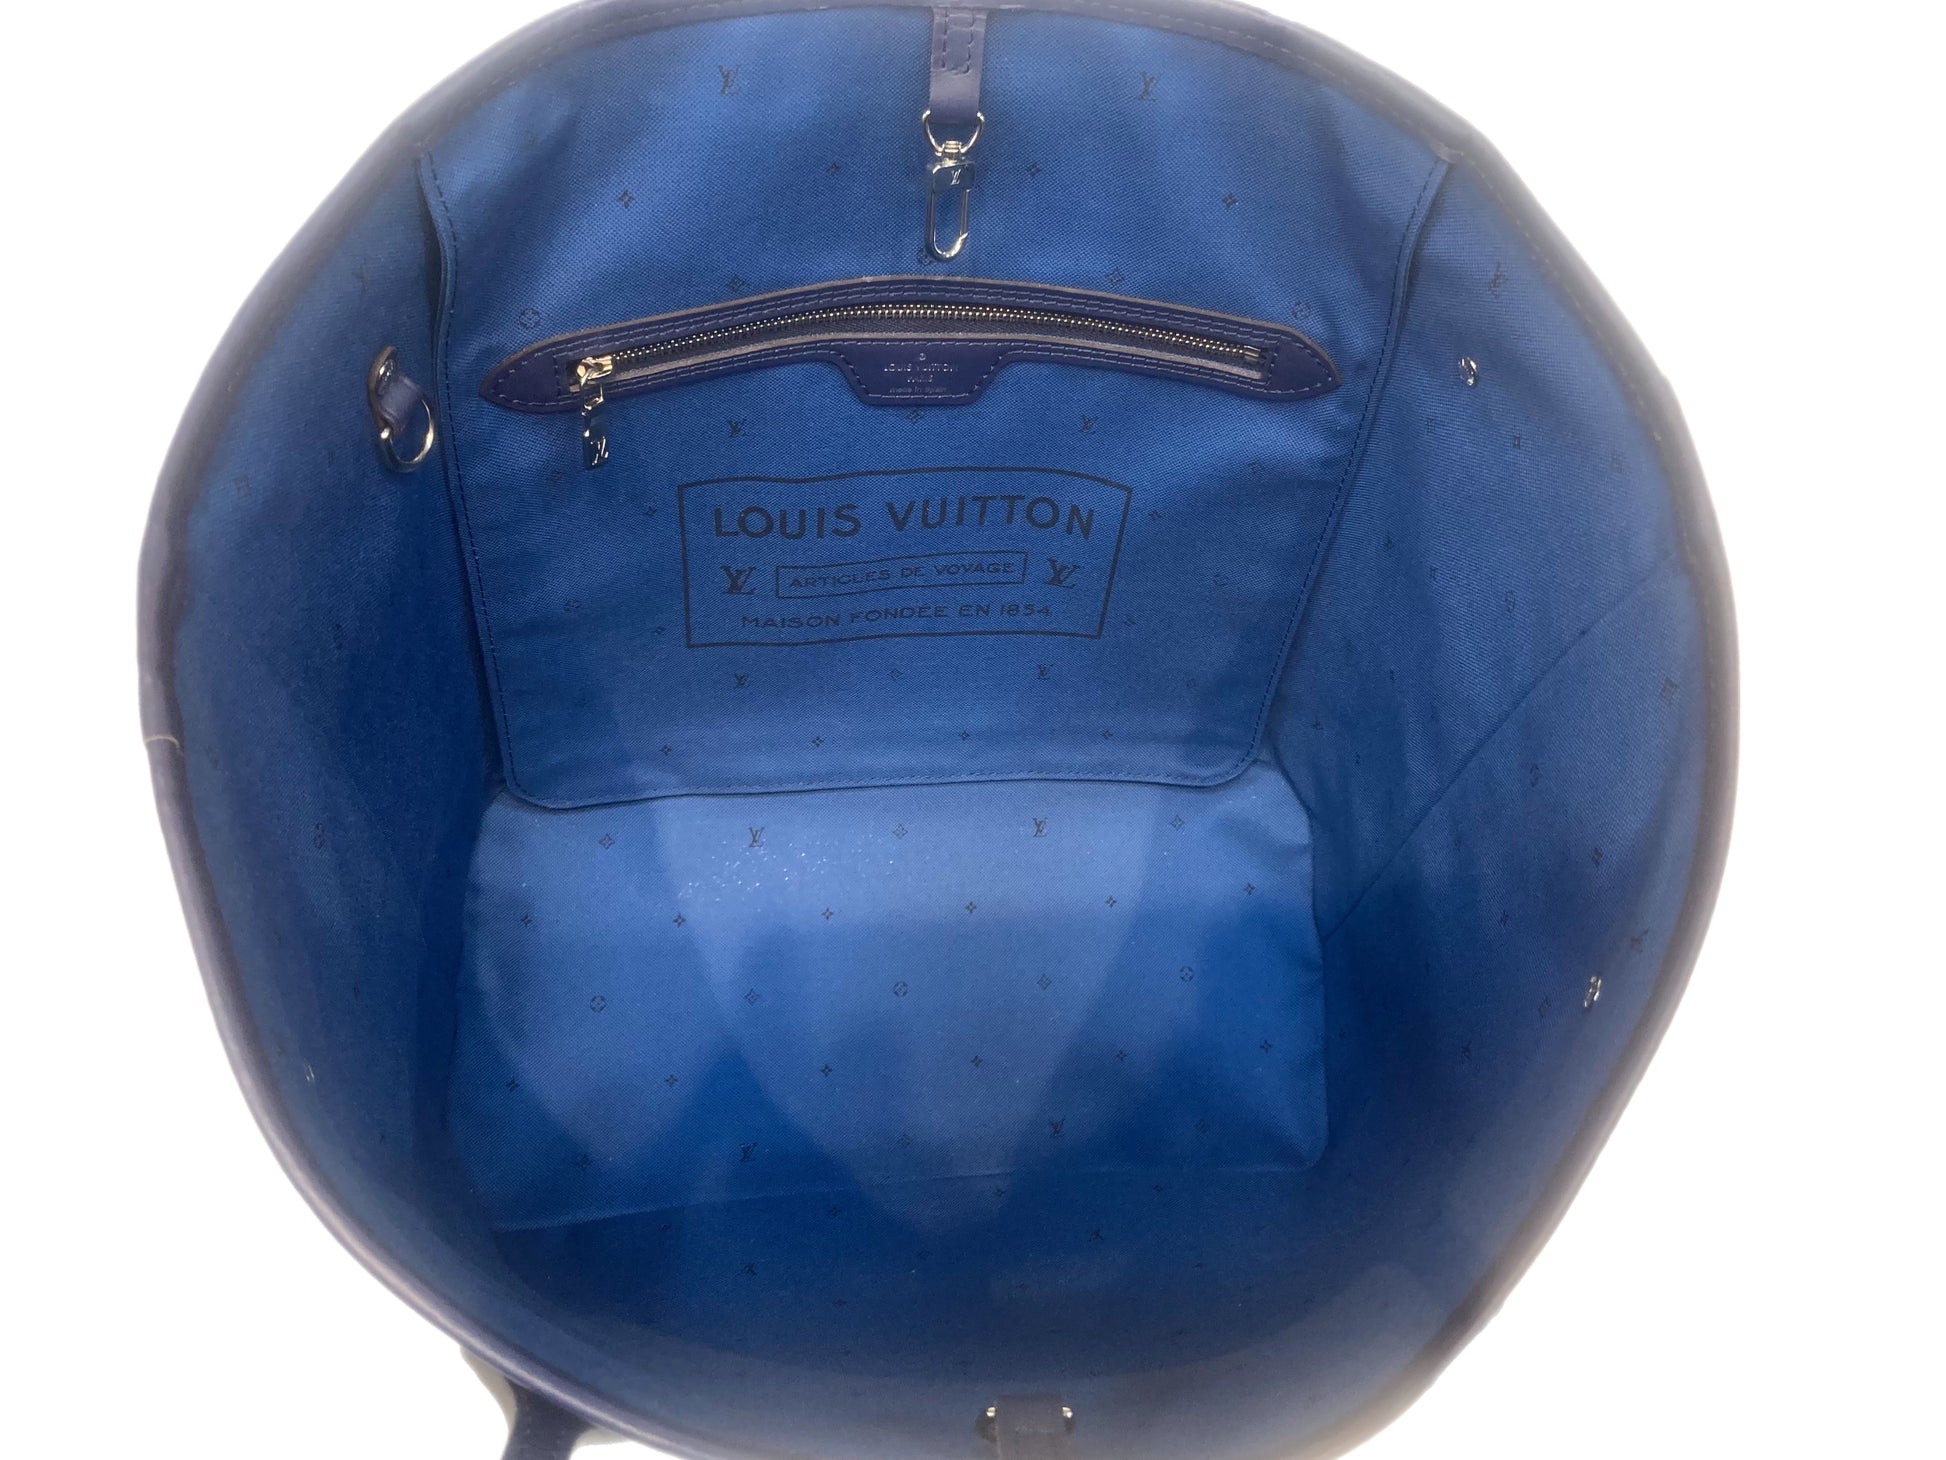 Louis Vuitton Neverfull Escalate Tote